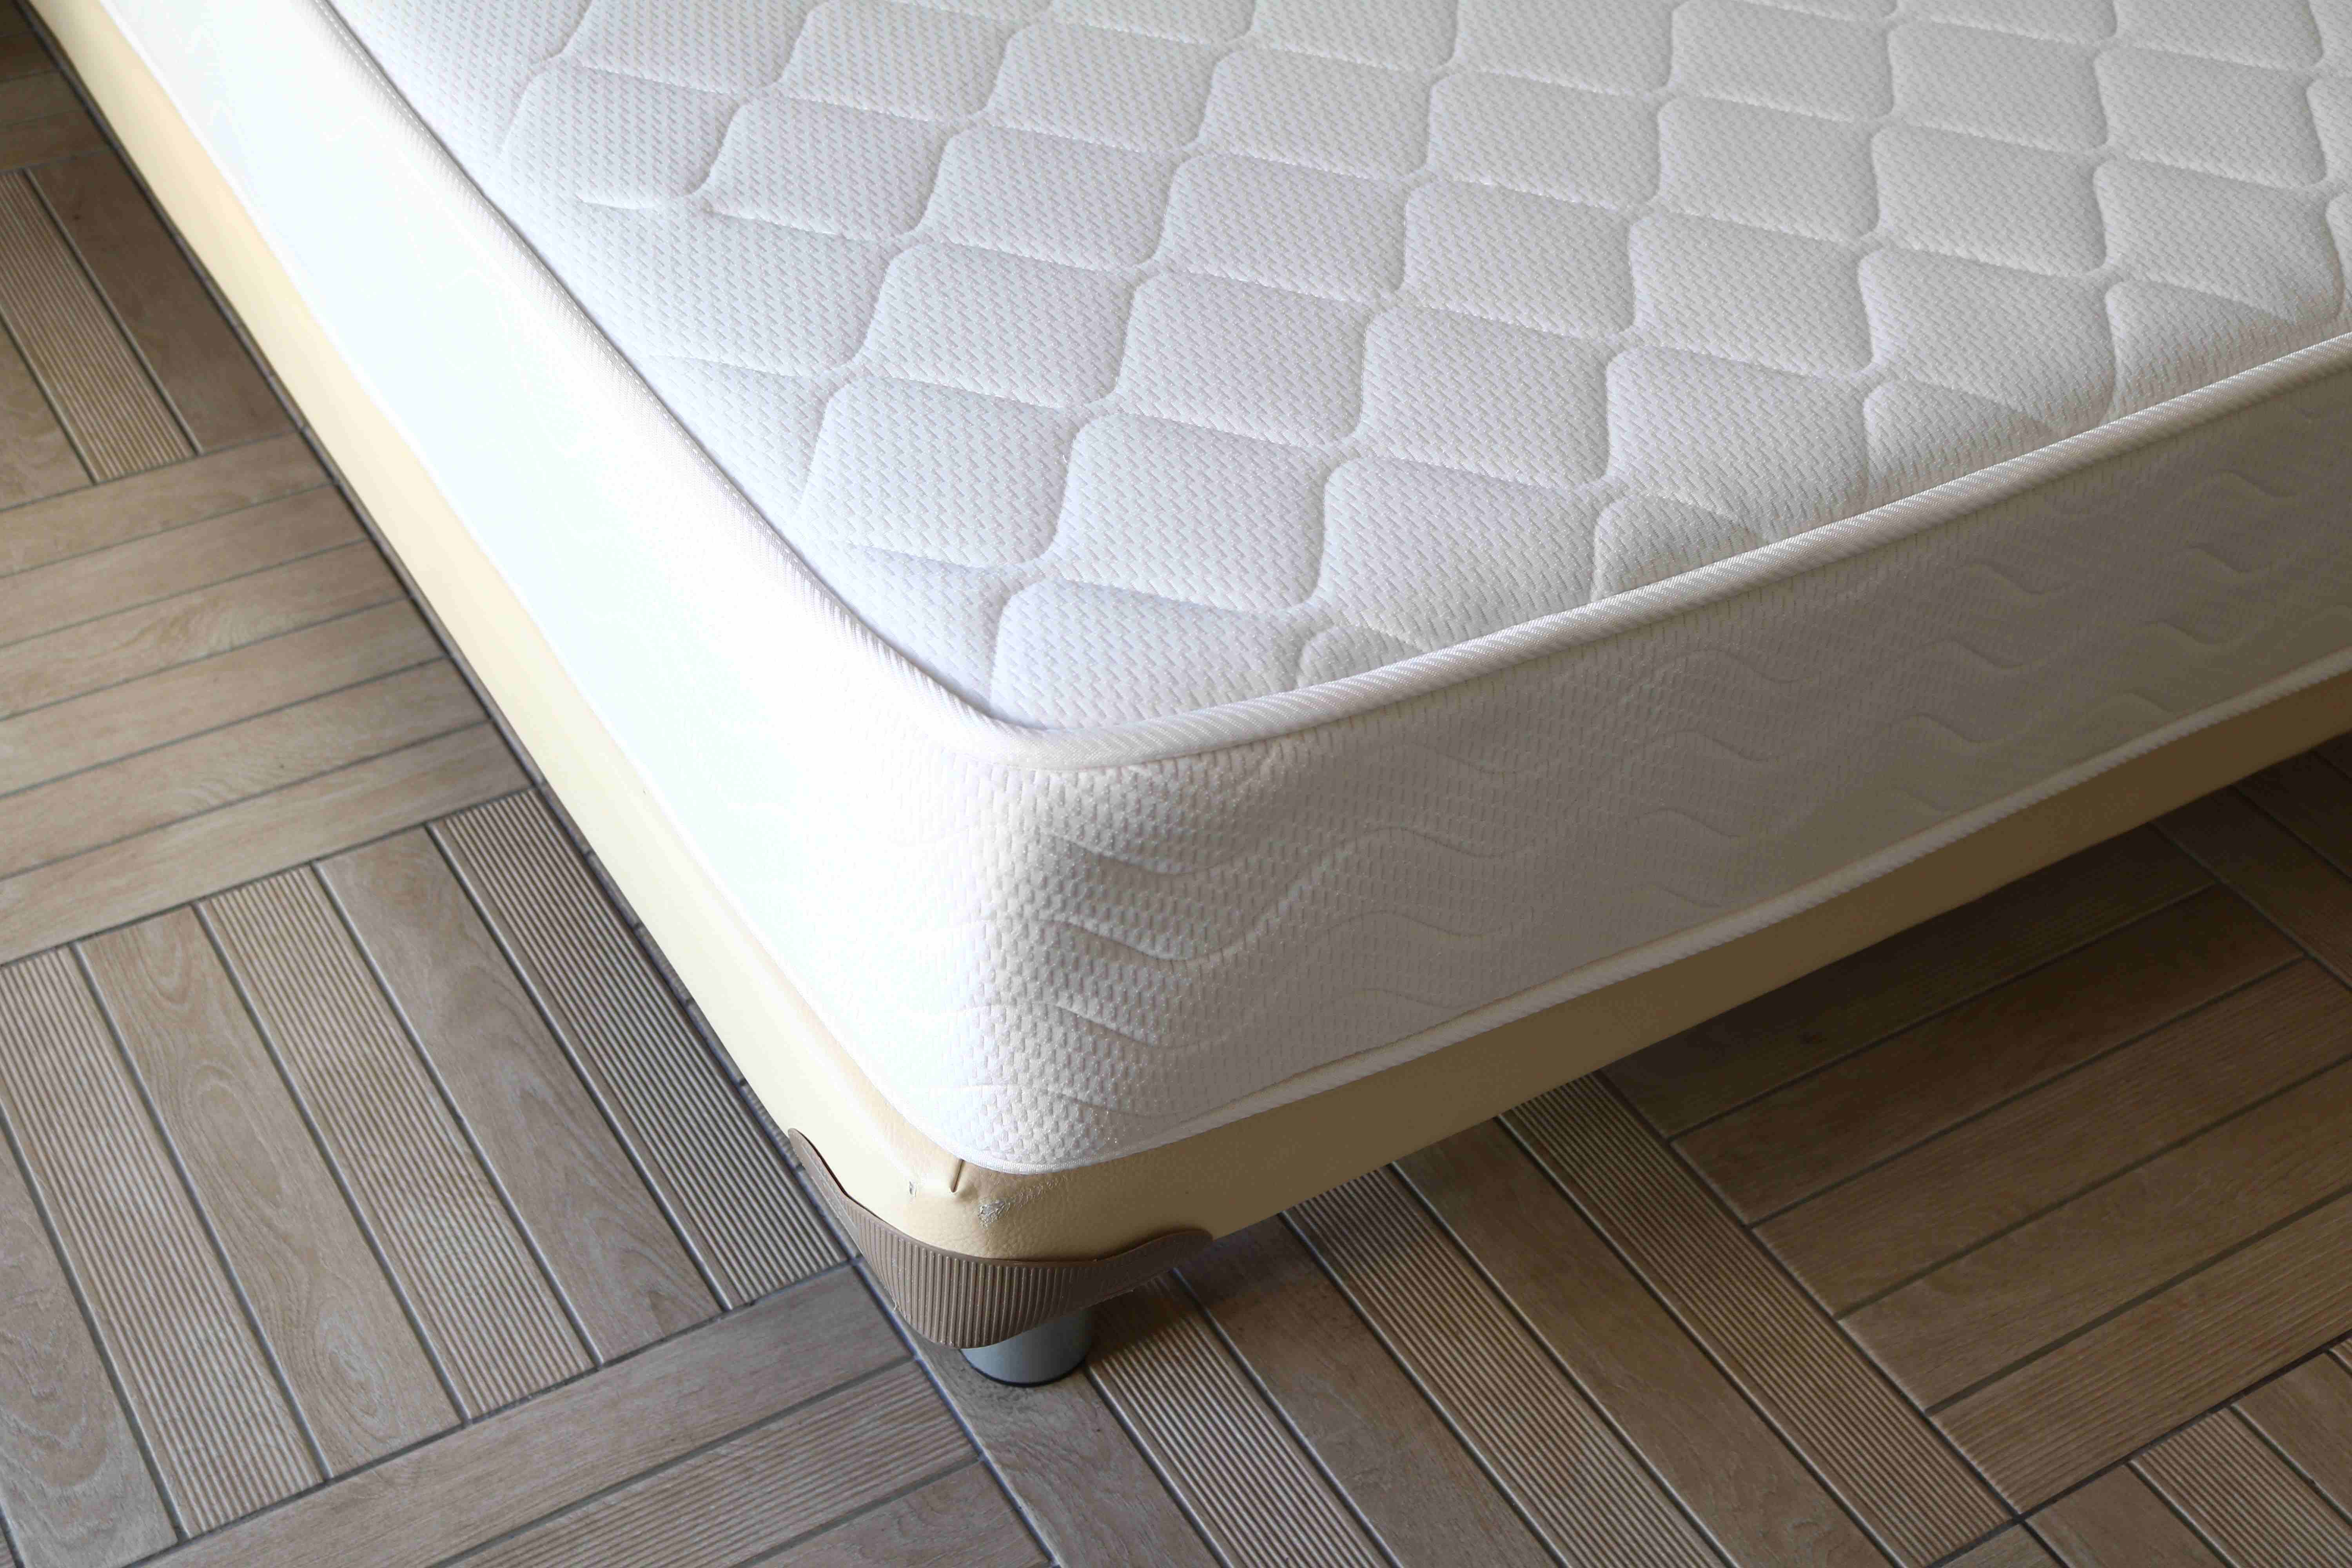 waterproof mattress protector with anchor bands reviews